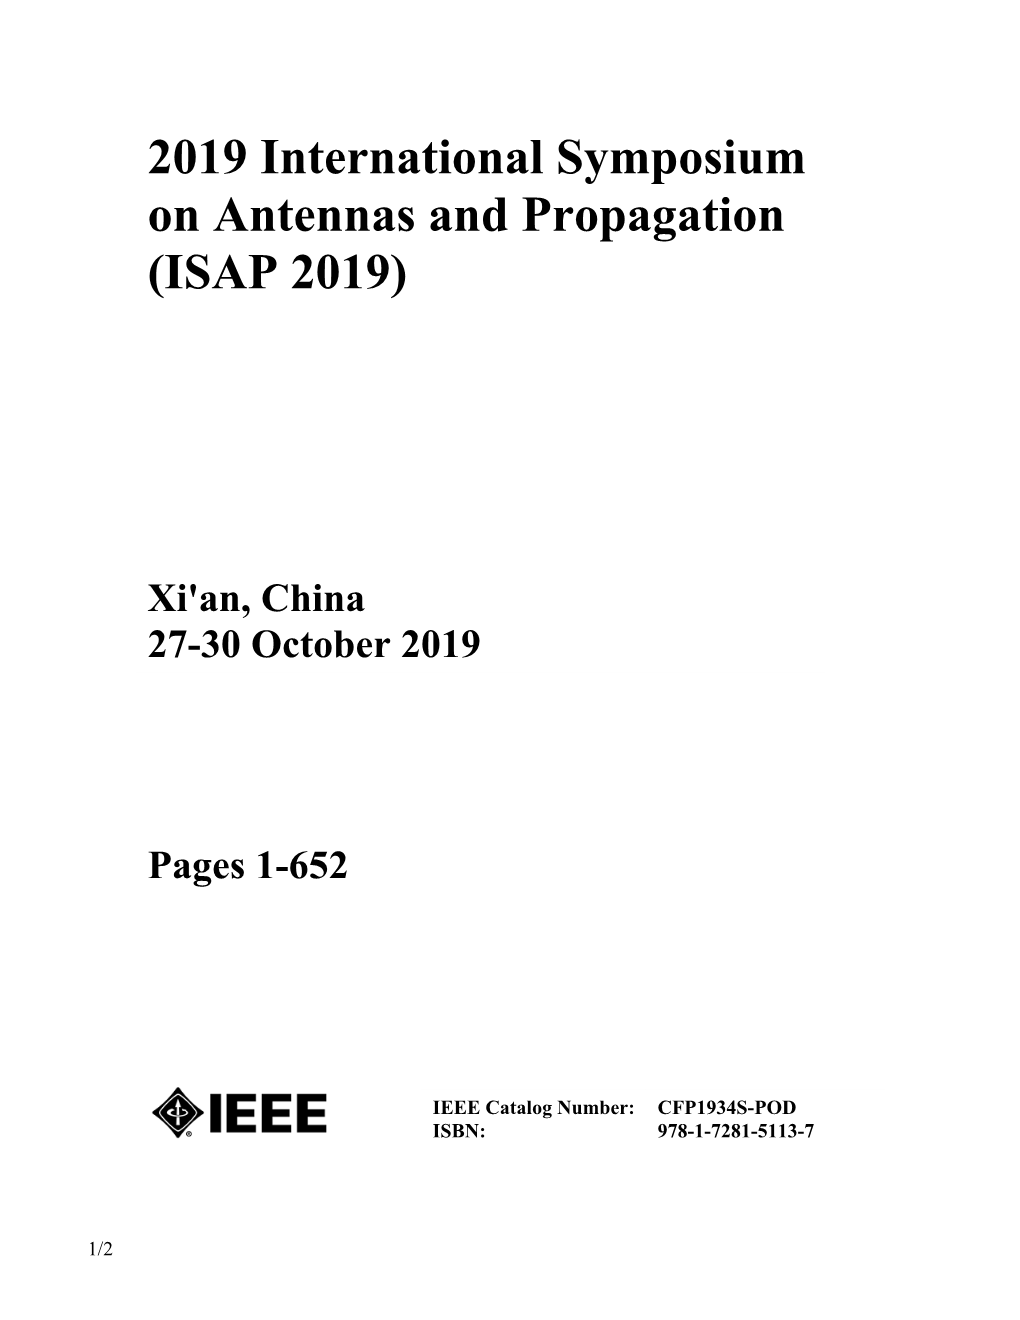 2019 International Symposium on Antennas and Propagation